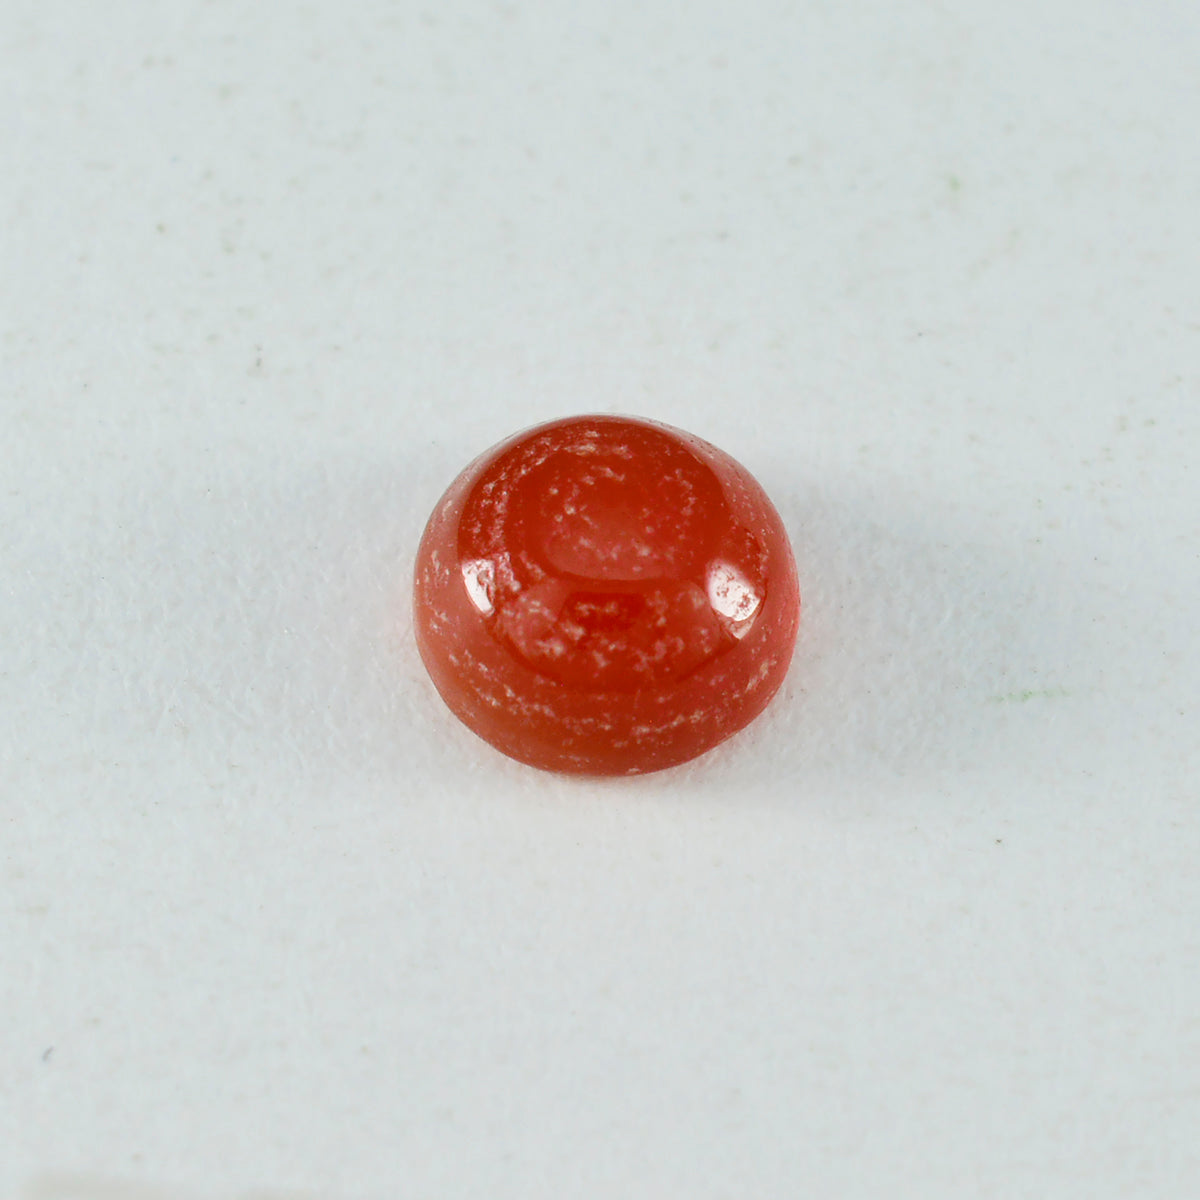 Riyogems 1PC Red Onyx Cabochon 13x13 mm Round Shape amazing Quality Loose Gemstone